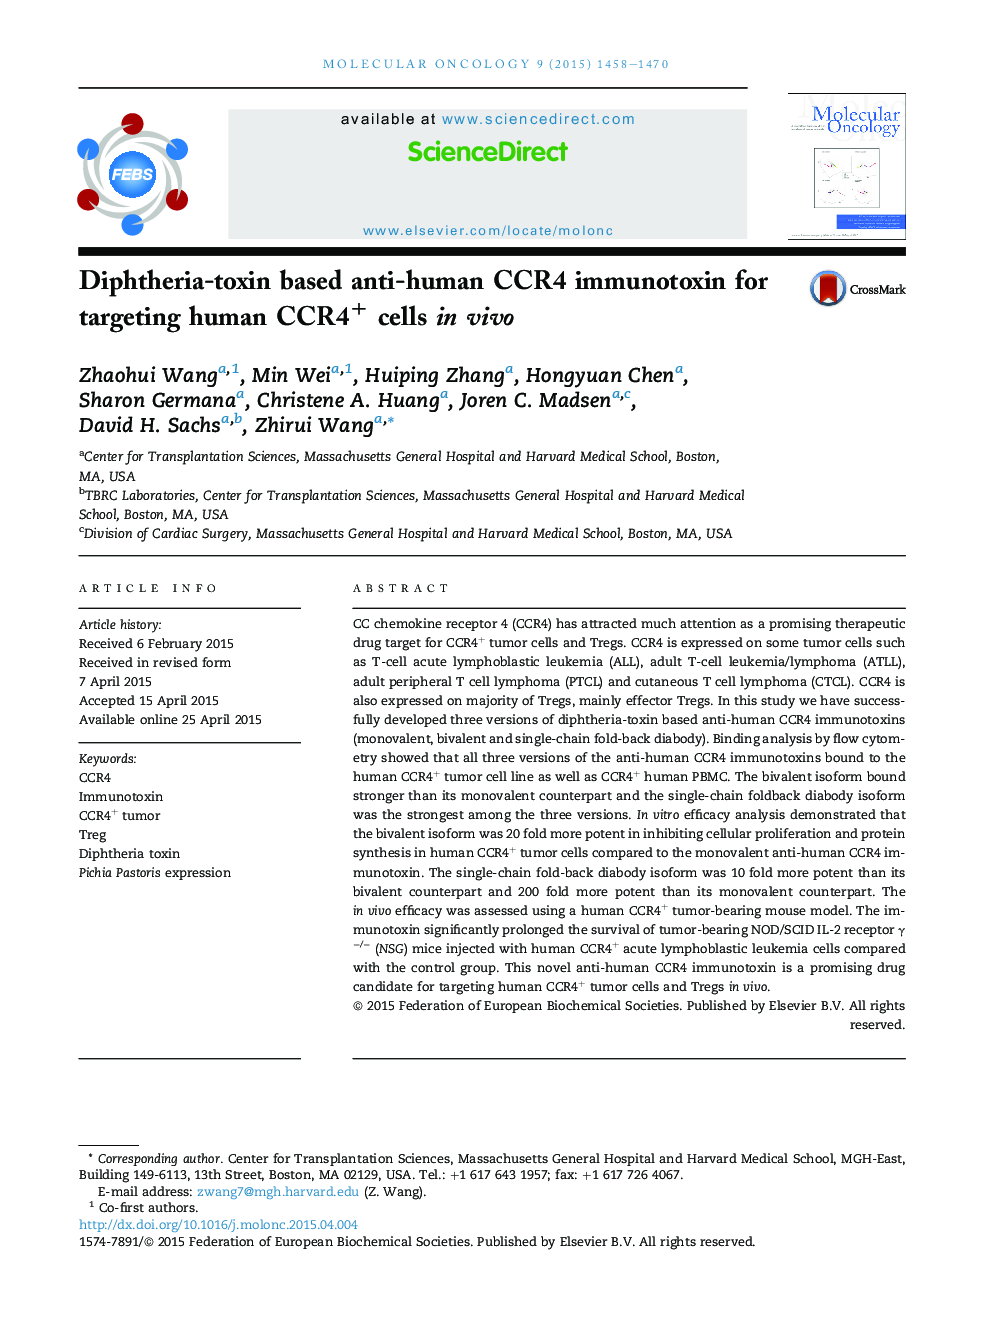 Diphtheria-toxin based anti-human CCR4 immunotoxin for targeting human CCR4+ cells inÂ vivo